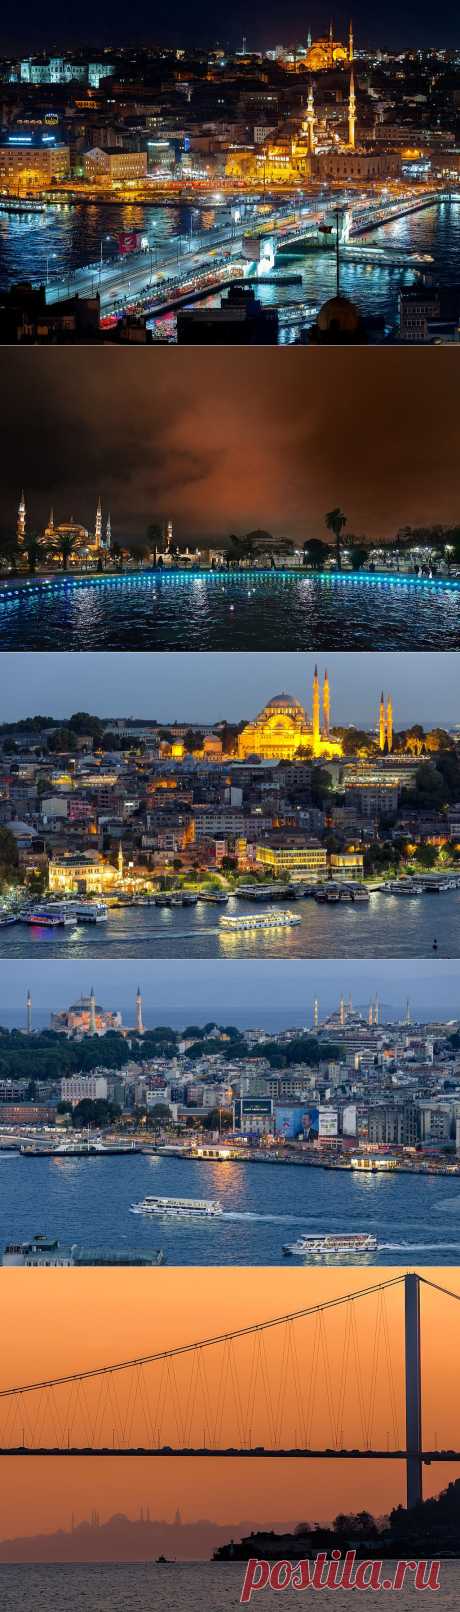 Стамбул - город контрастов!